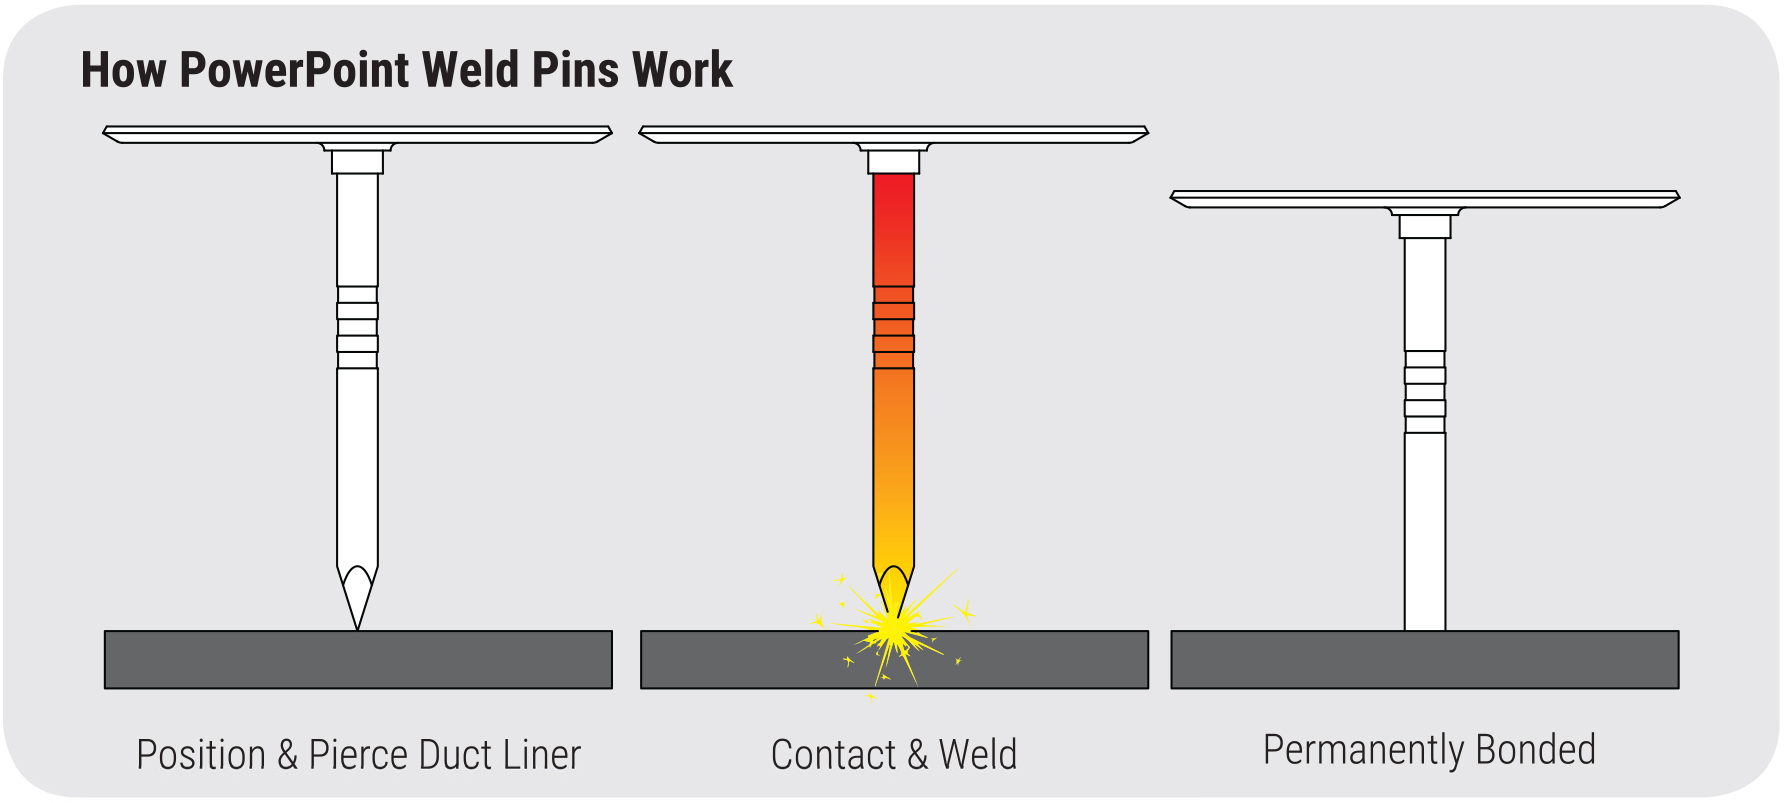 How PowerPoint Weld Pins Work